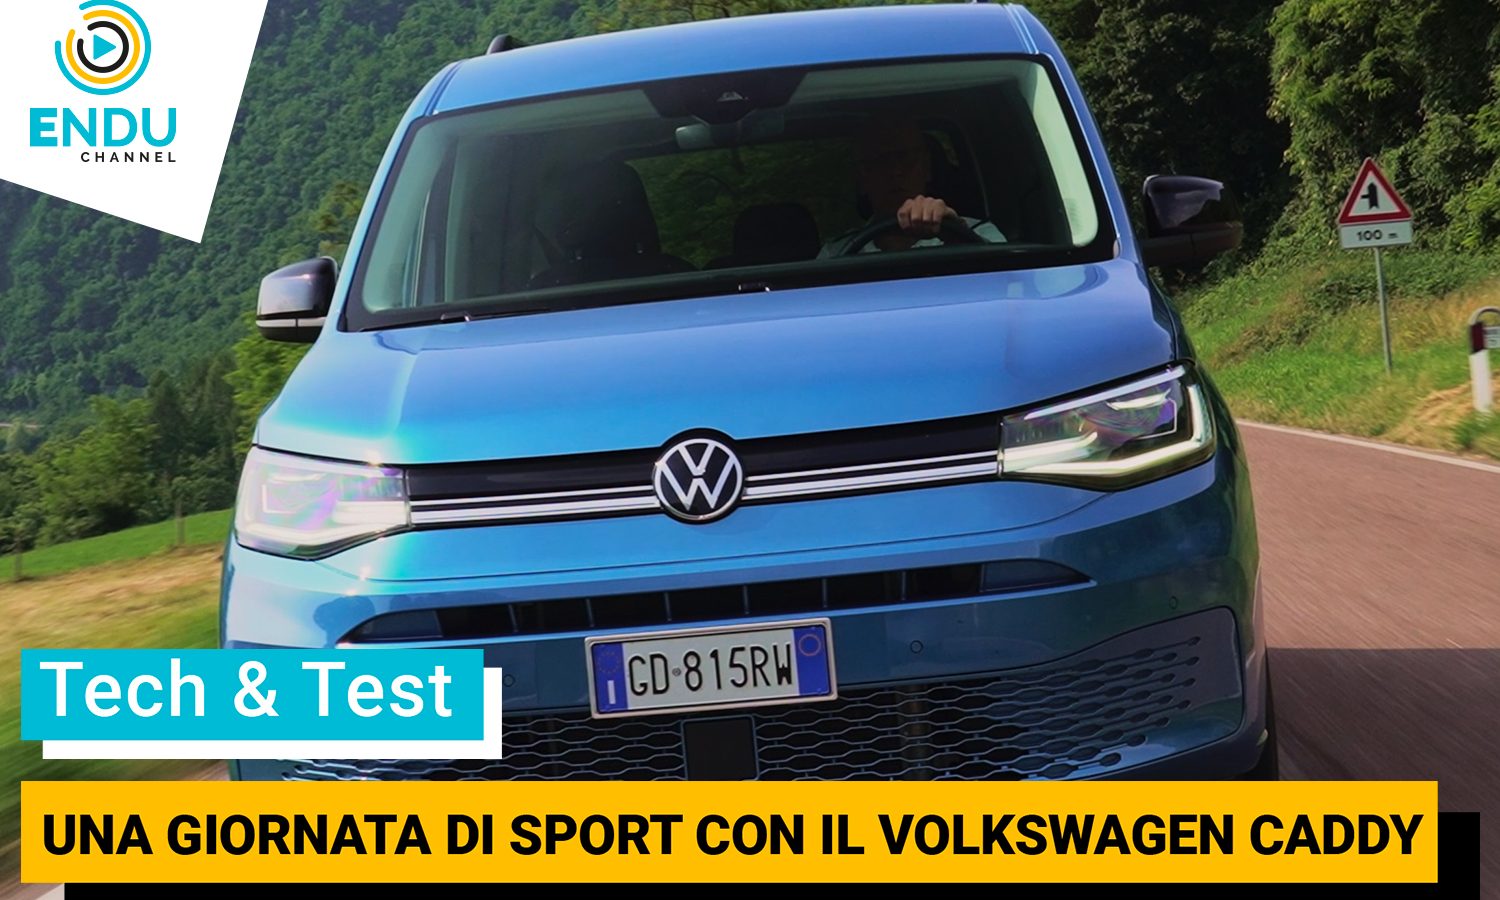 Nuovo Volkswagen Caddy: anima sportiva